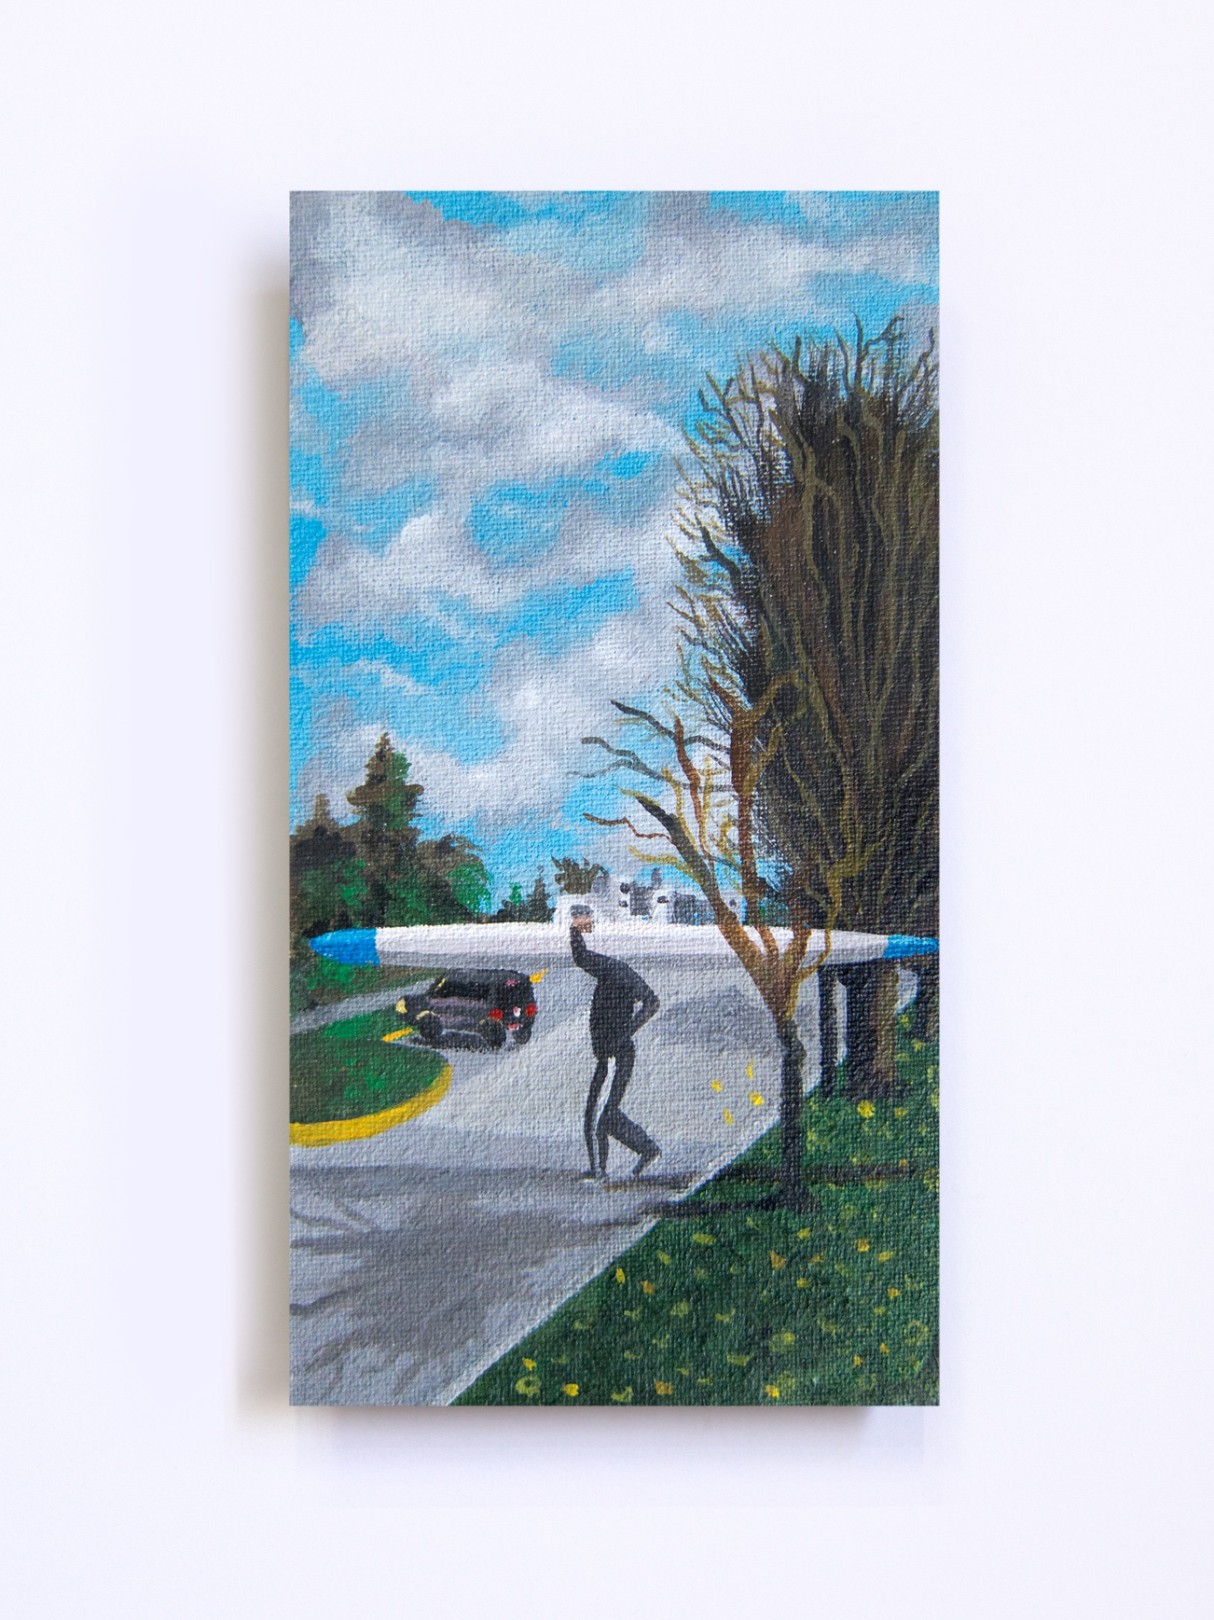 Un Remador, 2020 Acrylic on canvas 15 x 8 cm. / 5.9 x 3.1 in.